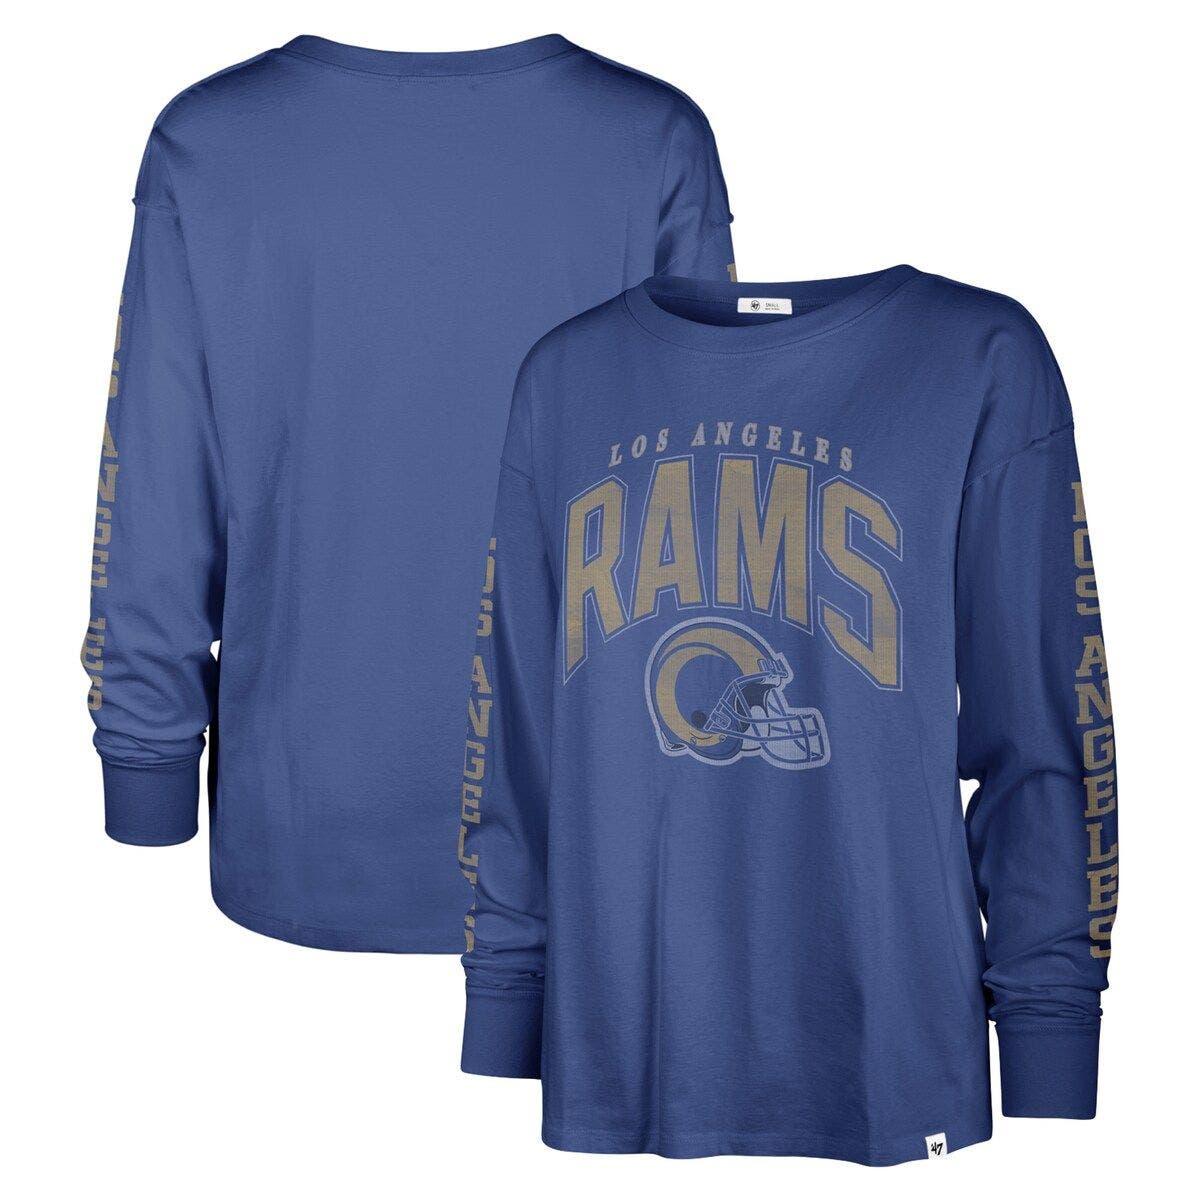 Los Angeles Rams blue shirt